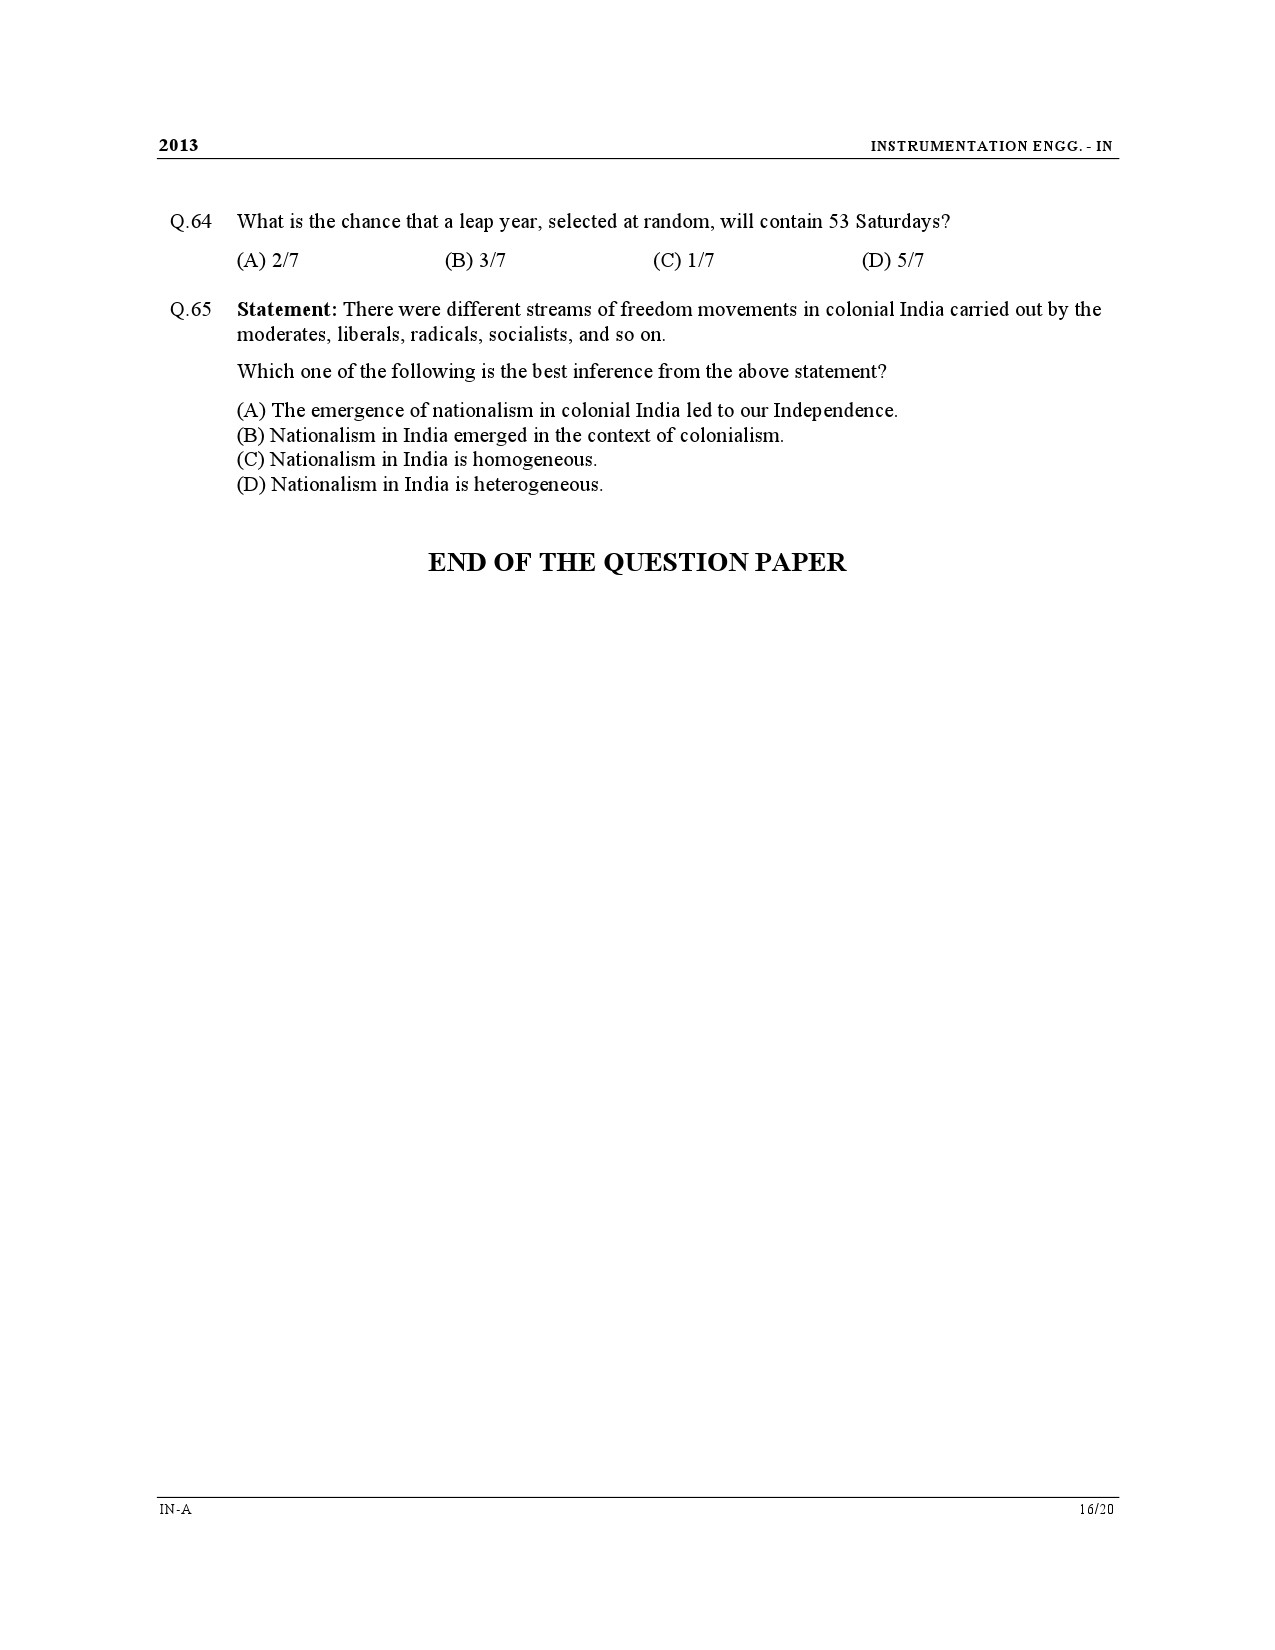 GATE Exam Question Paper 2013 Instrumentation Engineering 16